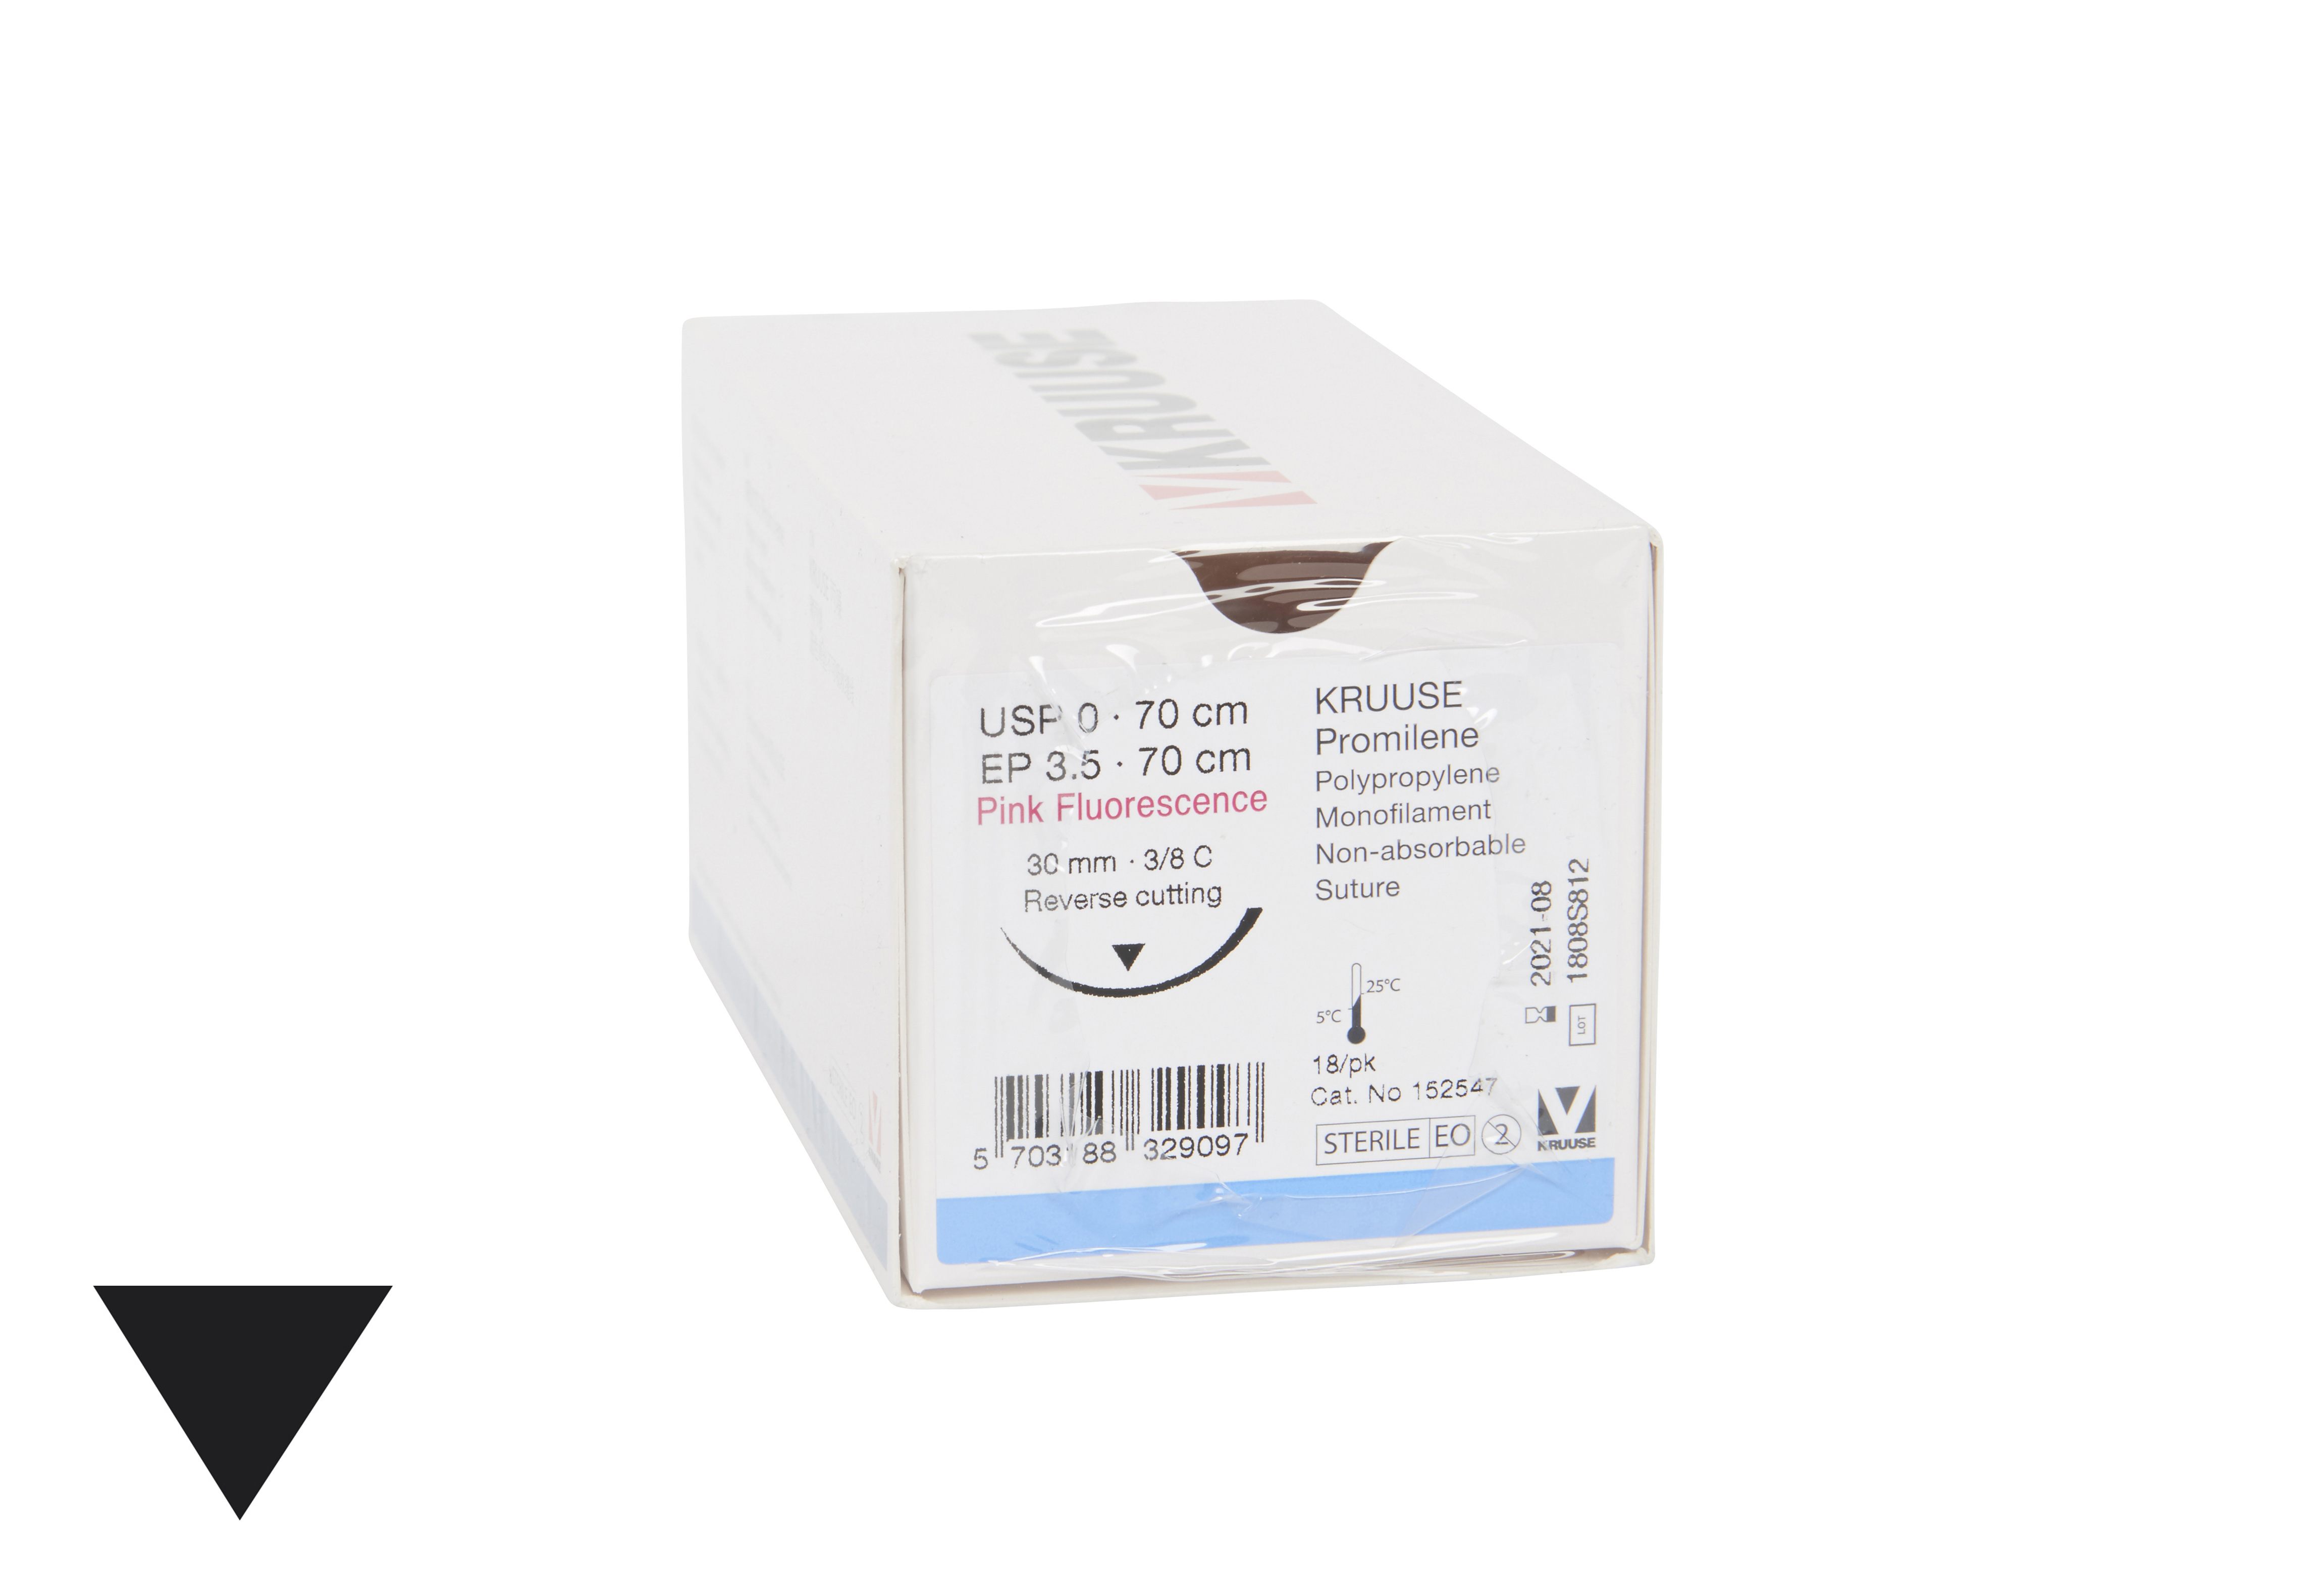 KRUUSE Promilene Suture USP 0/EP 3.5, 70 cm, pink (fluorescence), needle: 30 mm, 3/8 C, RC, 18/pk